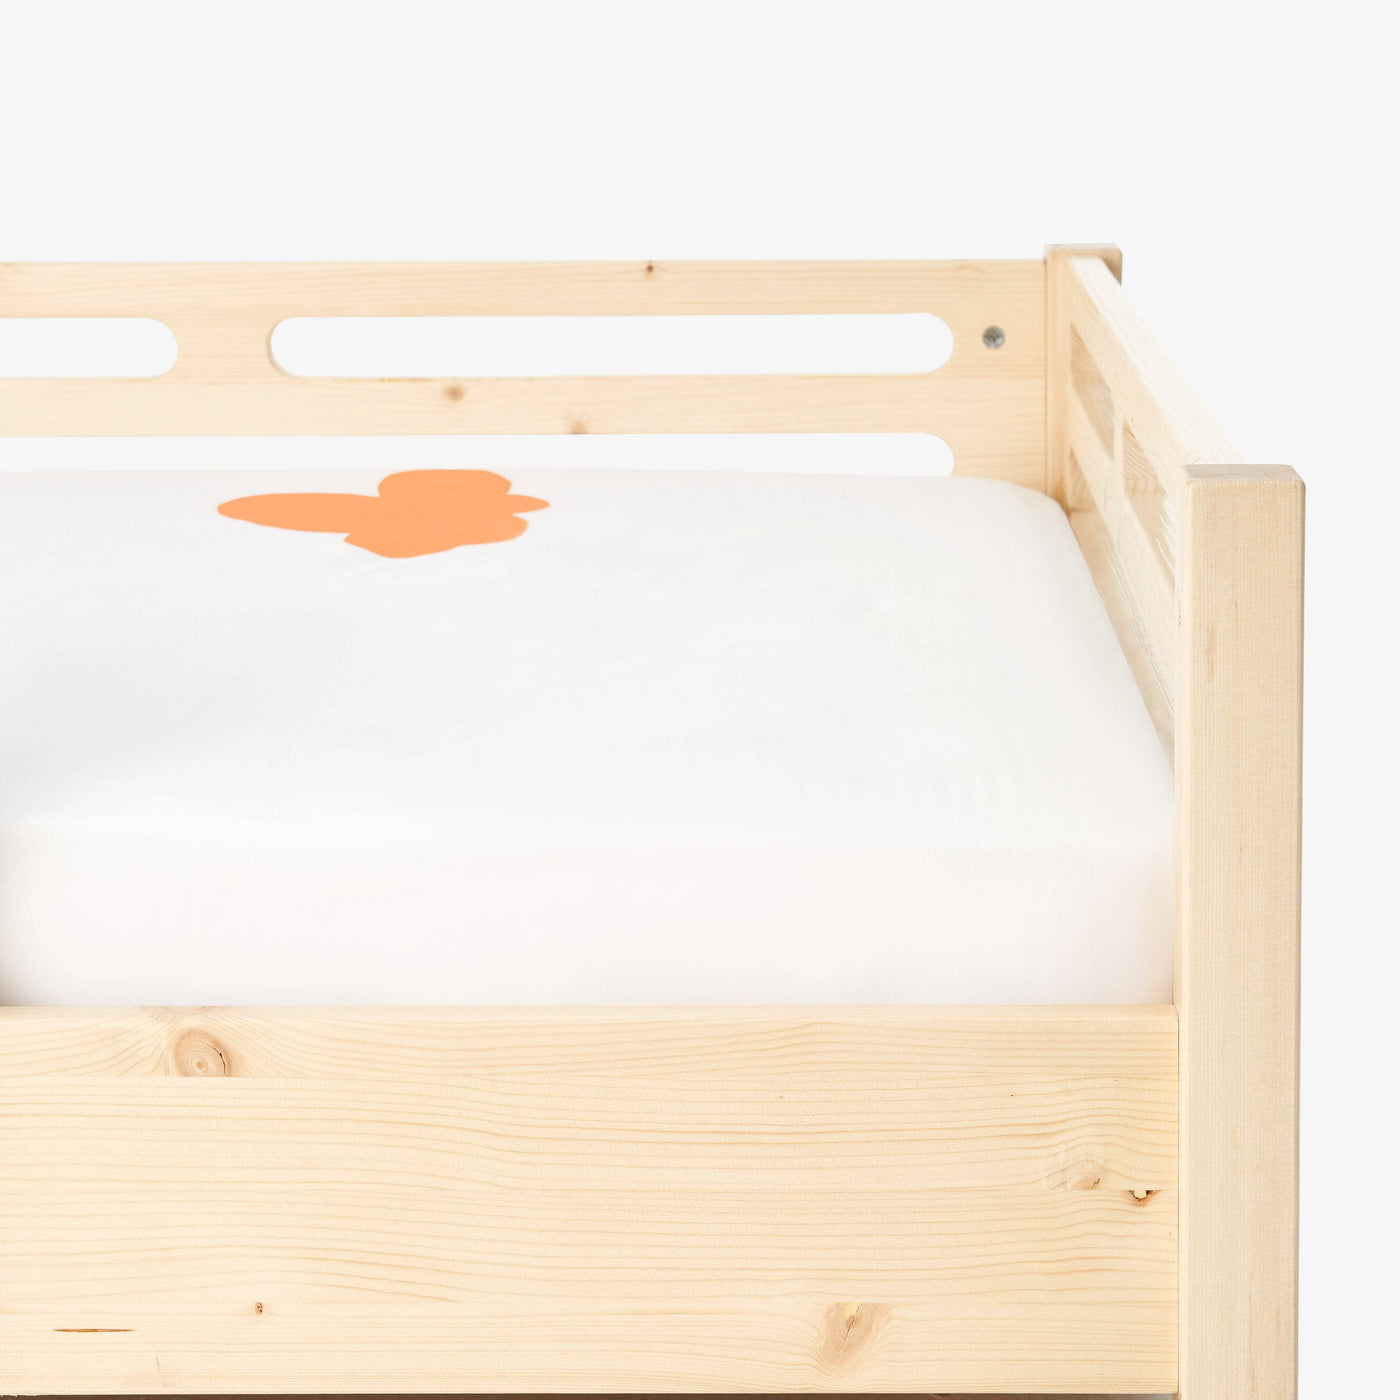 Bird Fitted Sheet, White - Orange, 90x190 cm Kids Bedding sazy.com